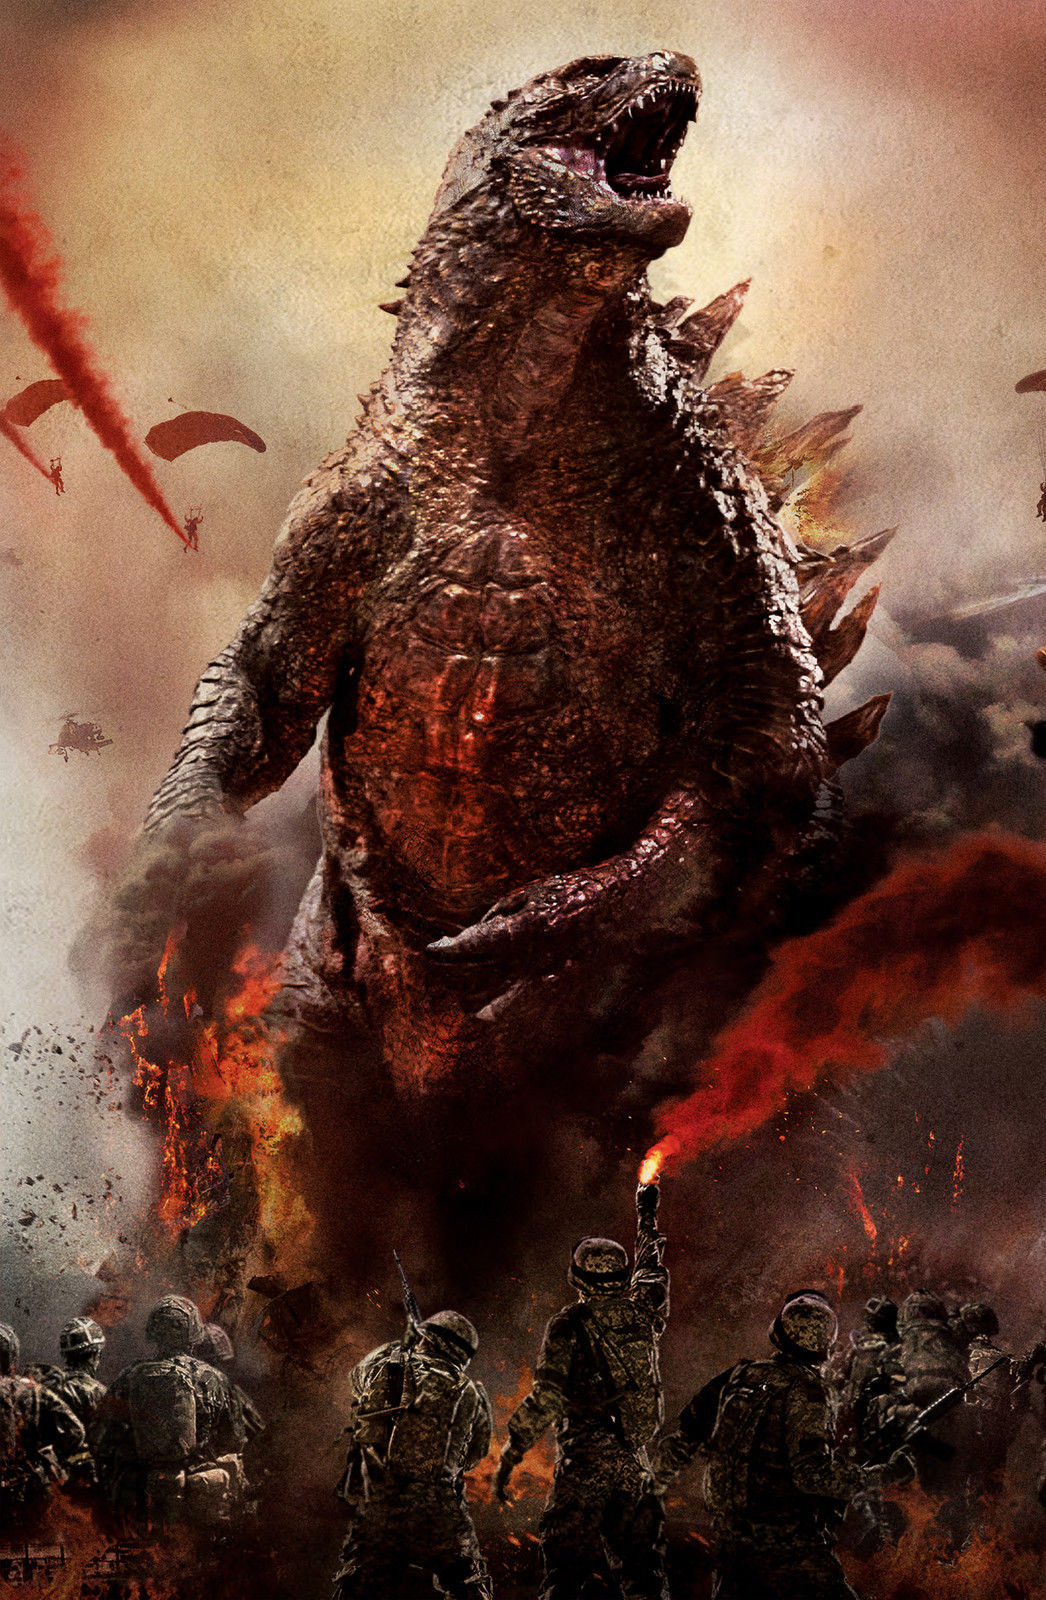 Godzilla Imax 3D Movie Review